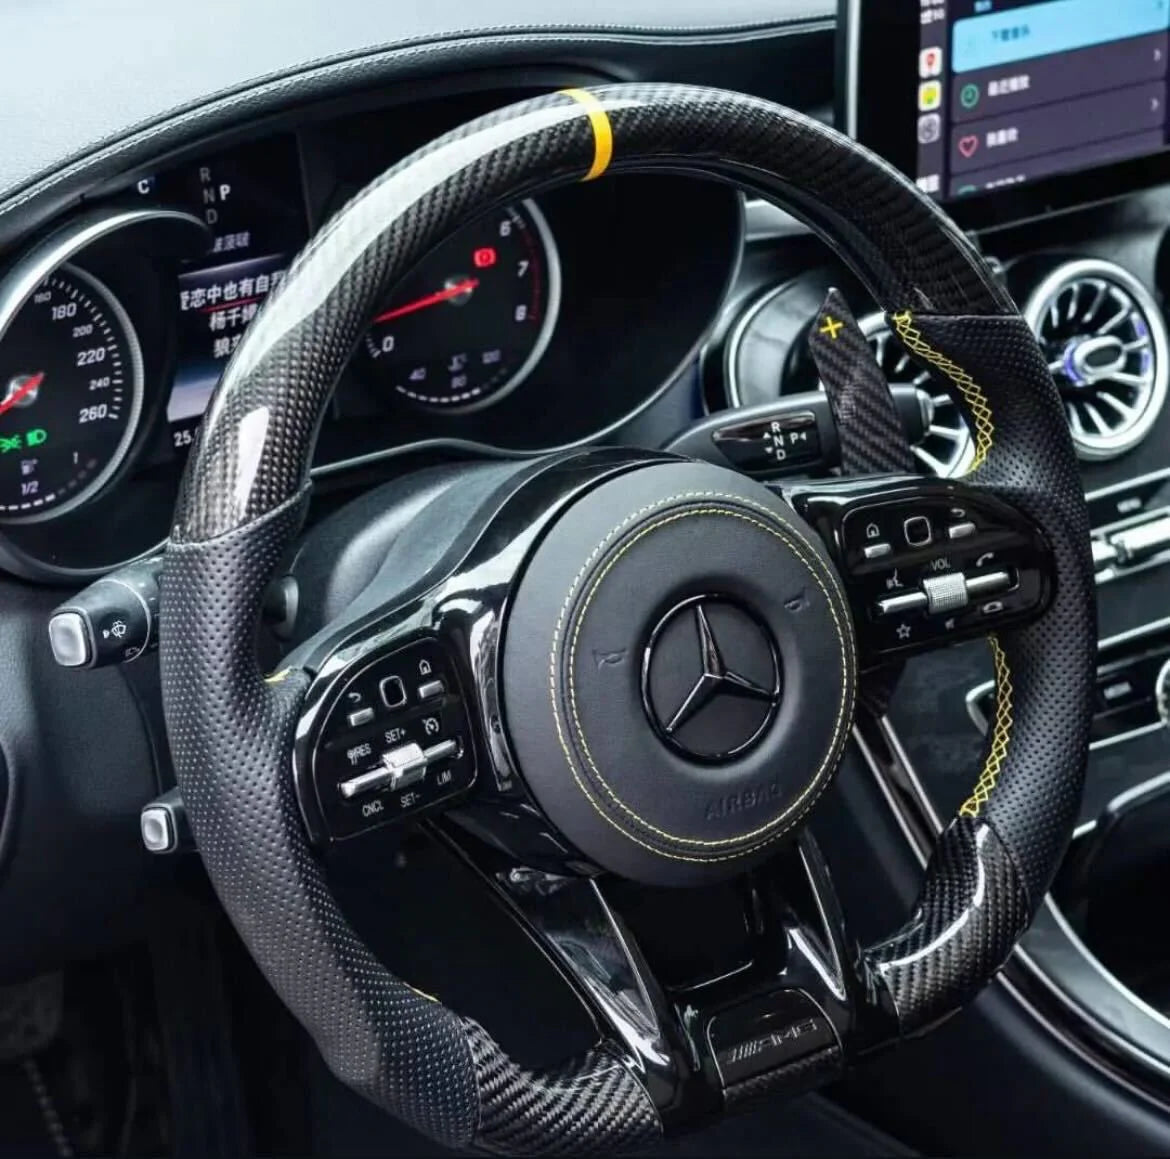 Mercedes - Carbon Fiber Steering Wheel (Custom)